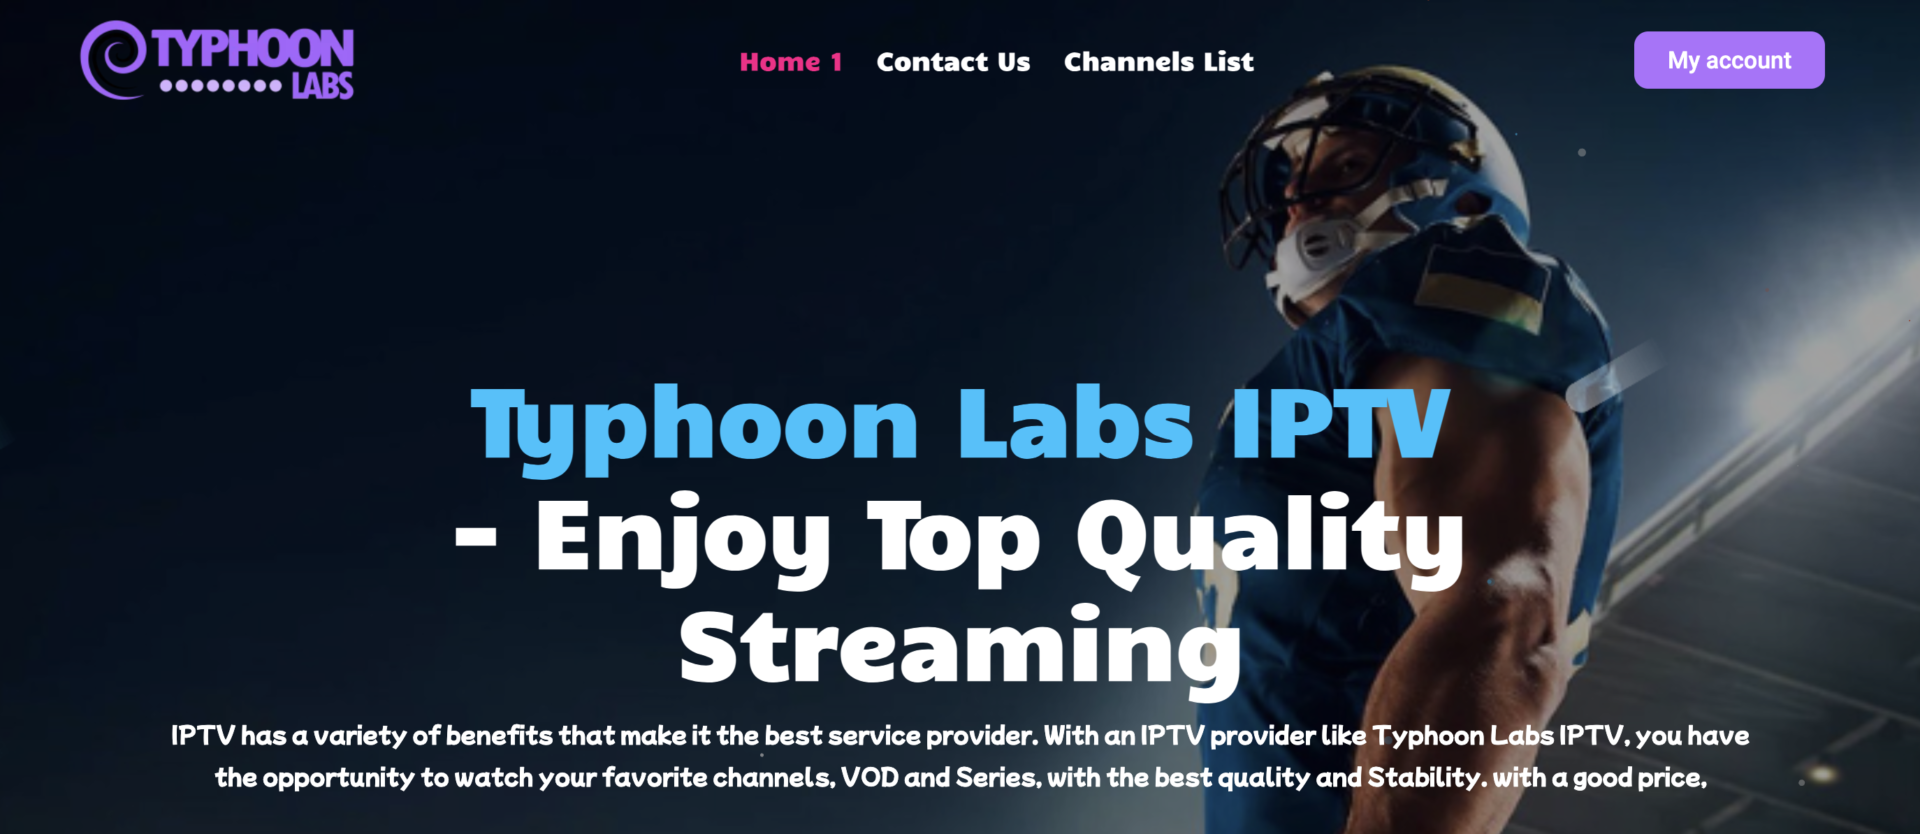 Typhoon Labs IPTV scam